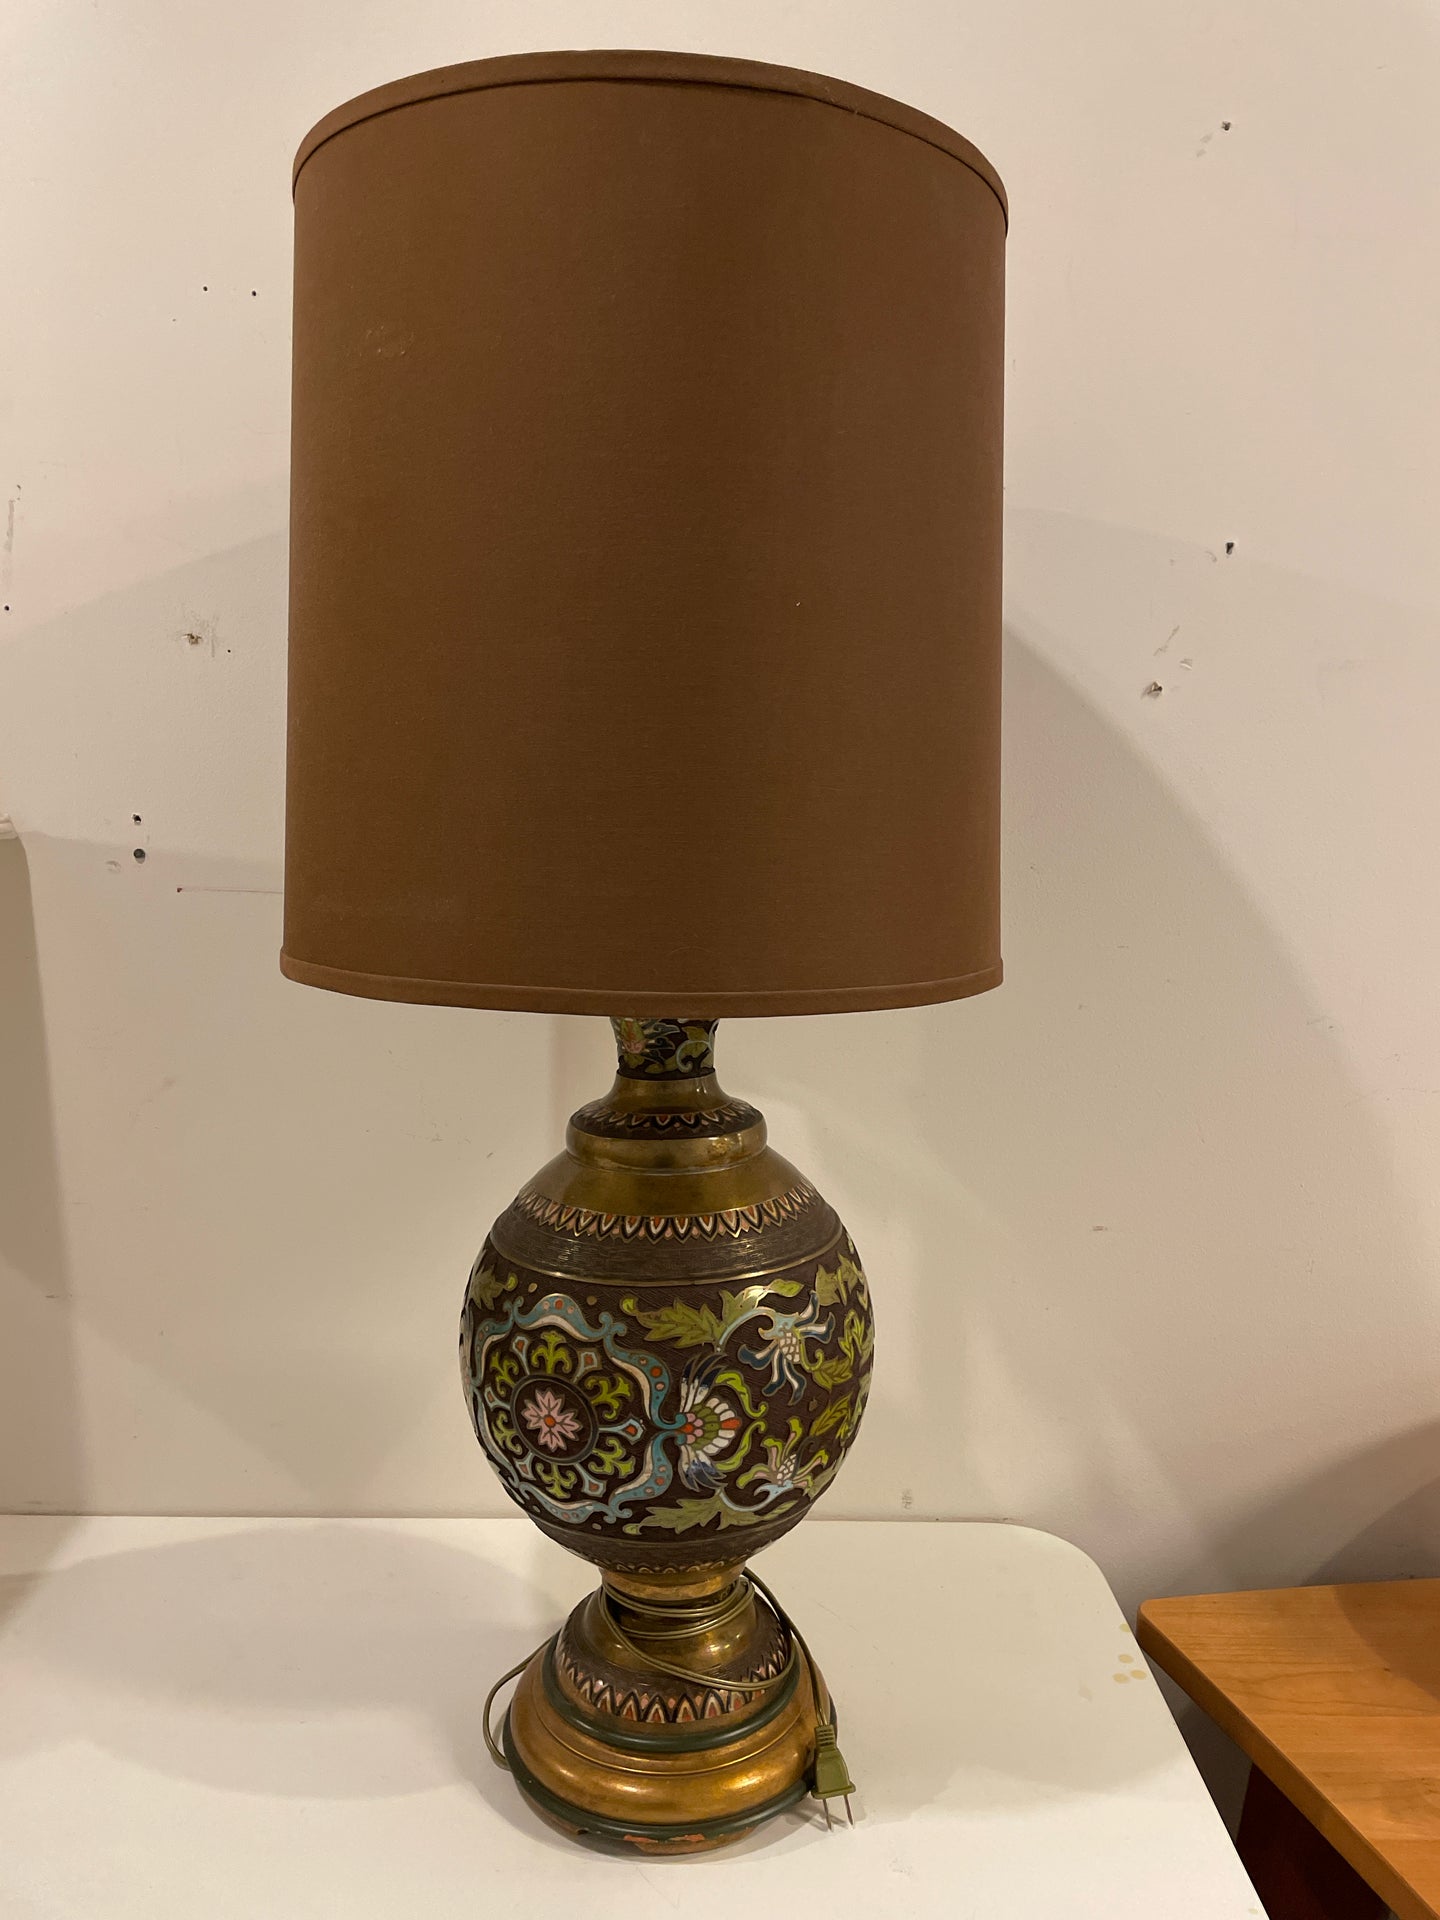 Vintage, Asian Motif Enamel & Brass Cloisonne Lamp from Marbo Lamp Co.